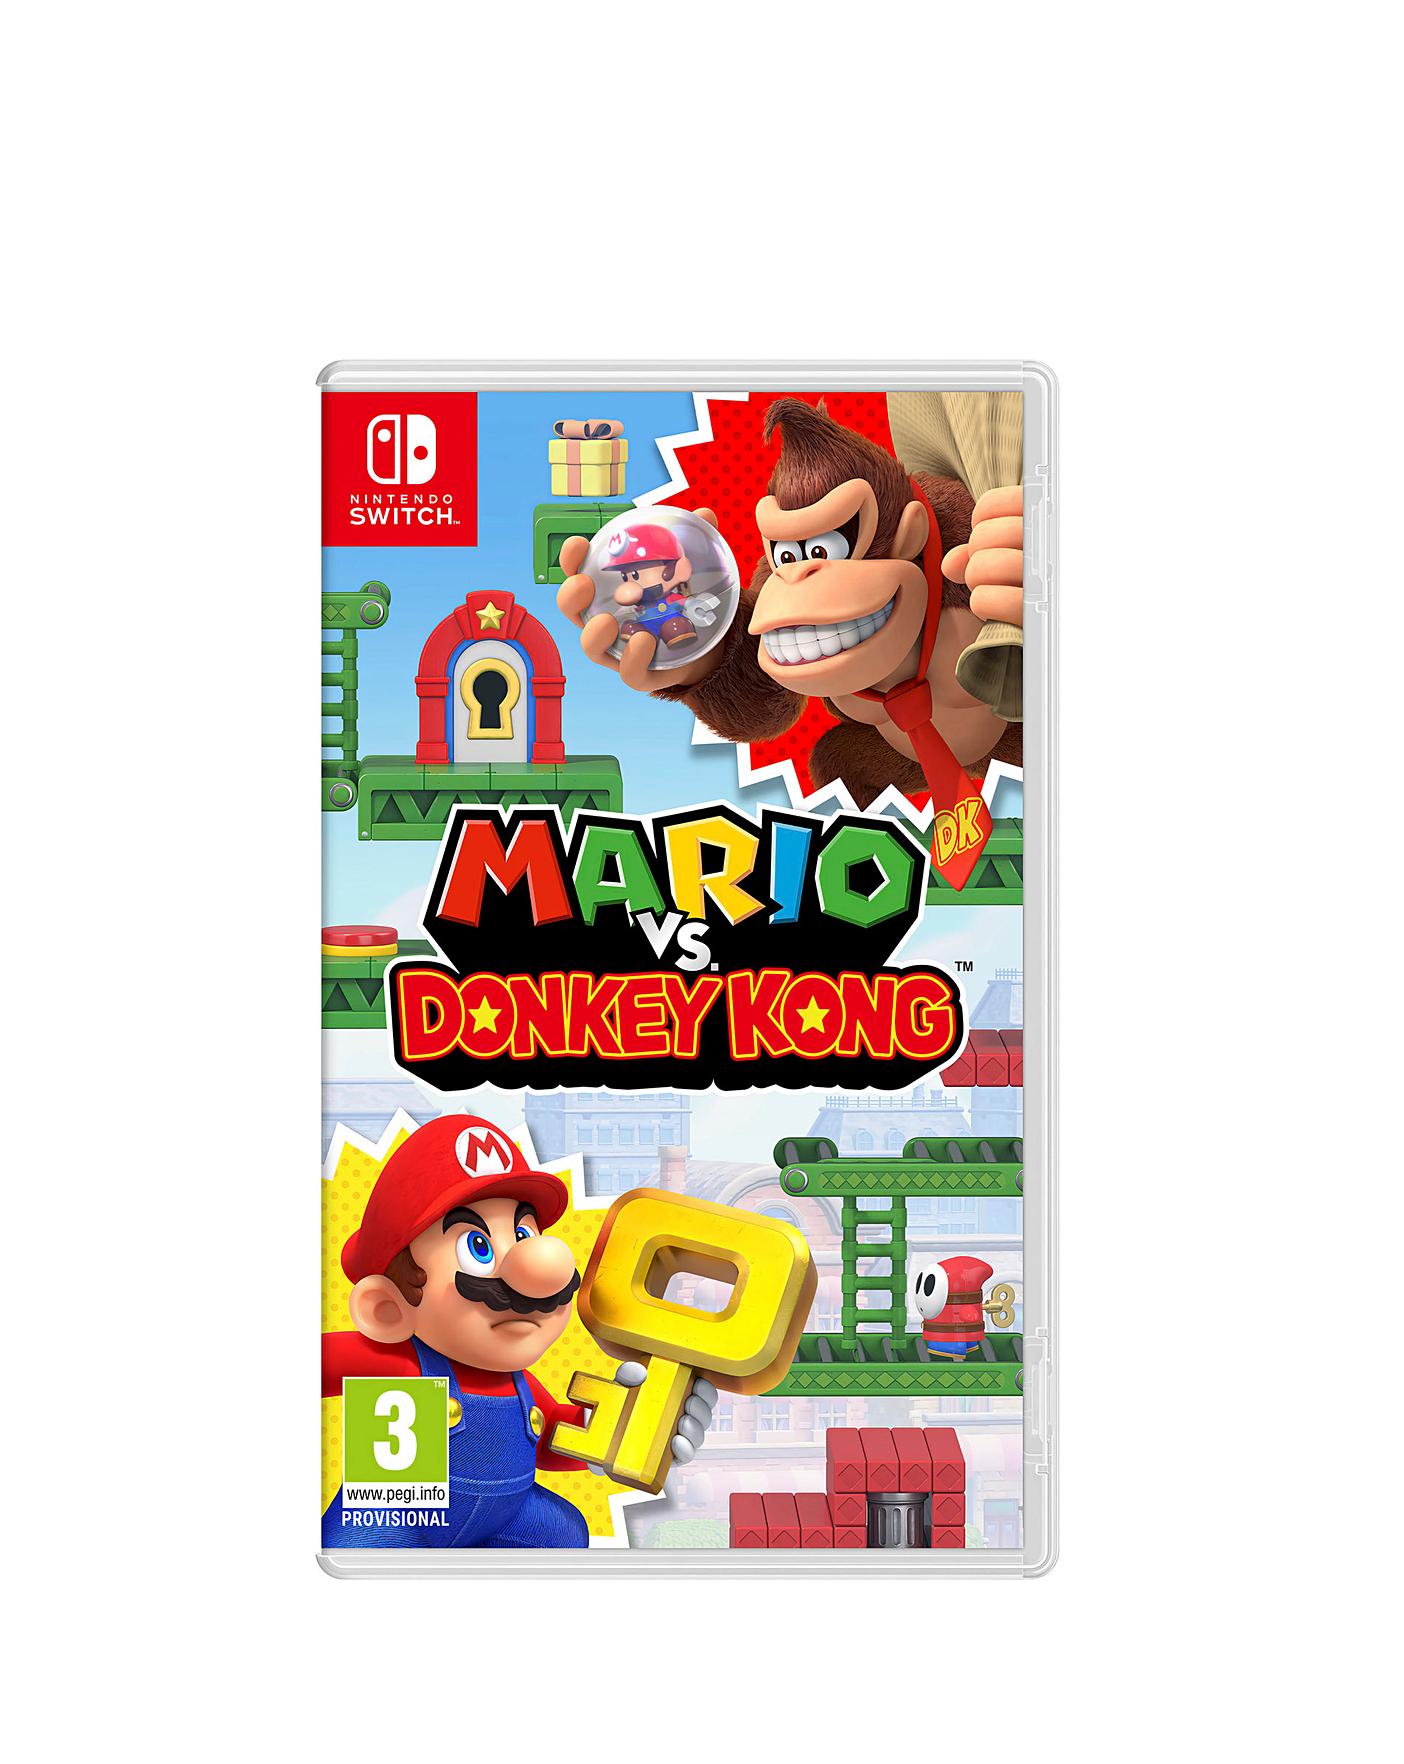 Mario vs. Donkey Kong - Nintendo Switch